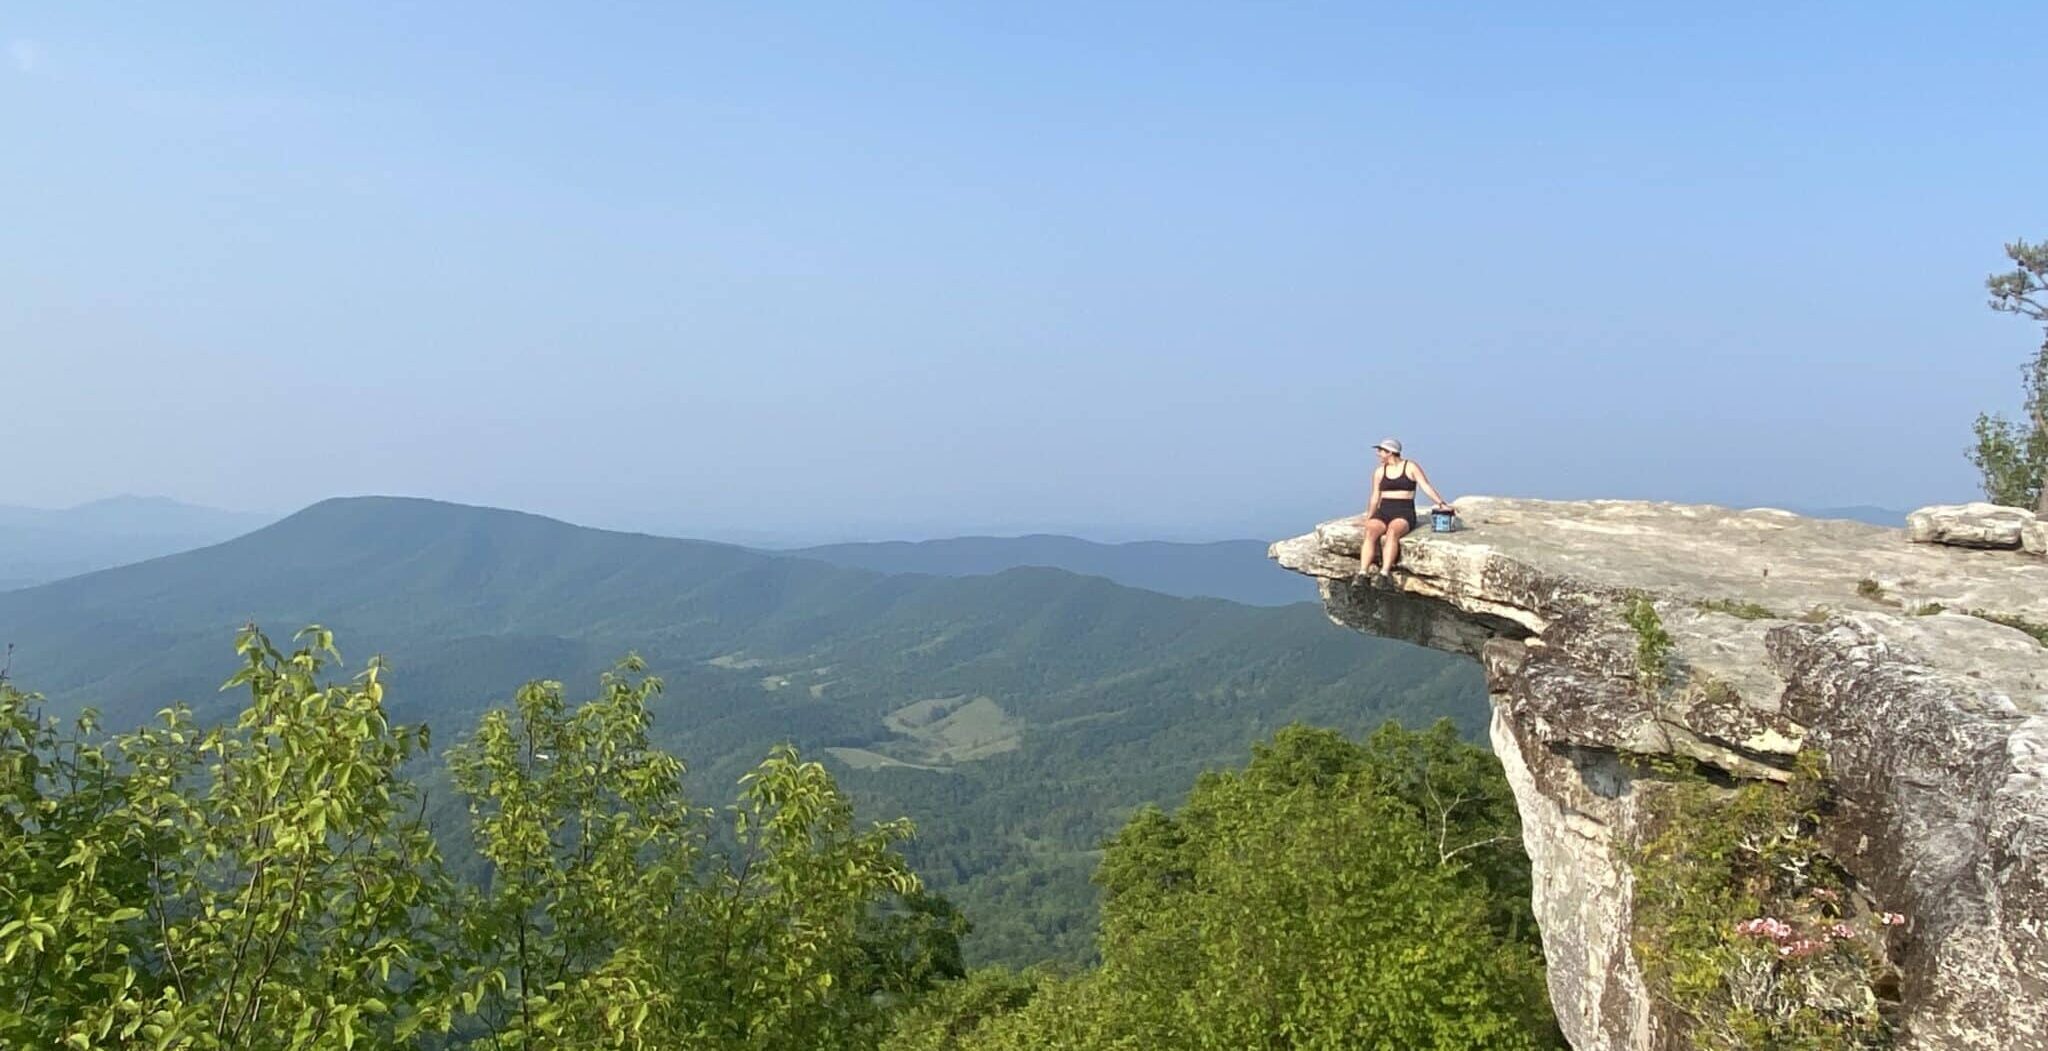 A thru-hiker relaxes on a cliff edge along the Appalachian Trail.